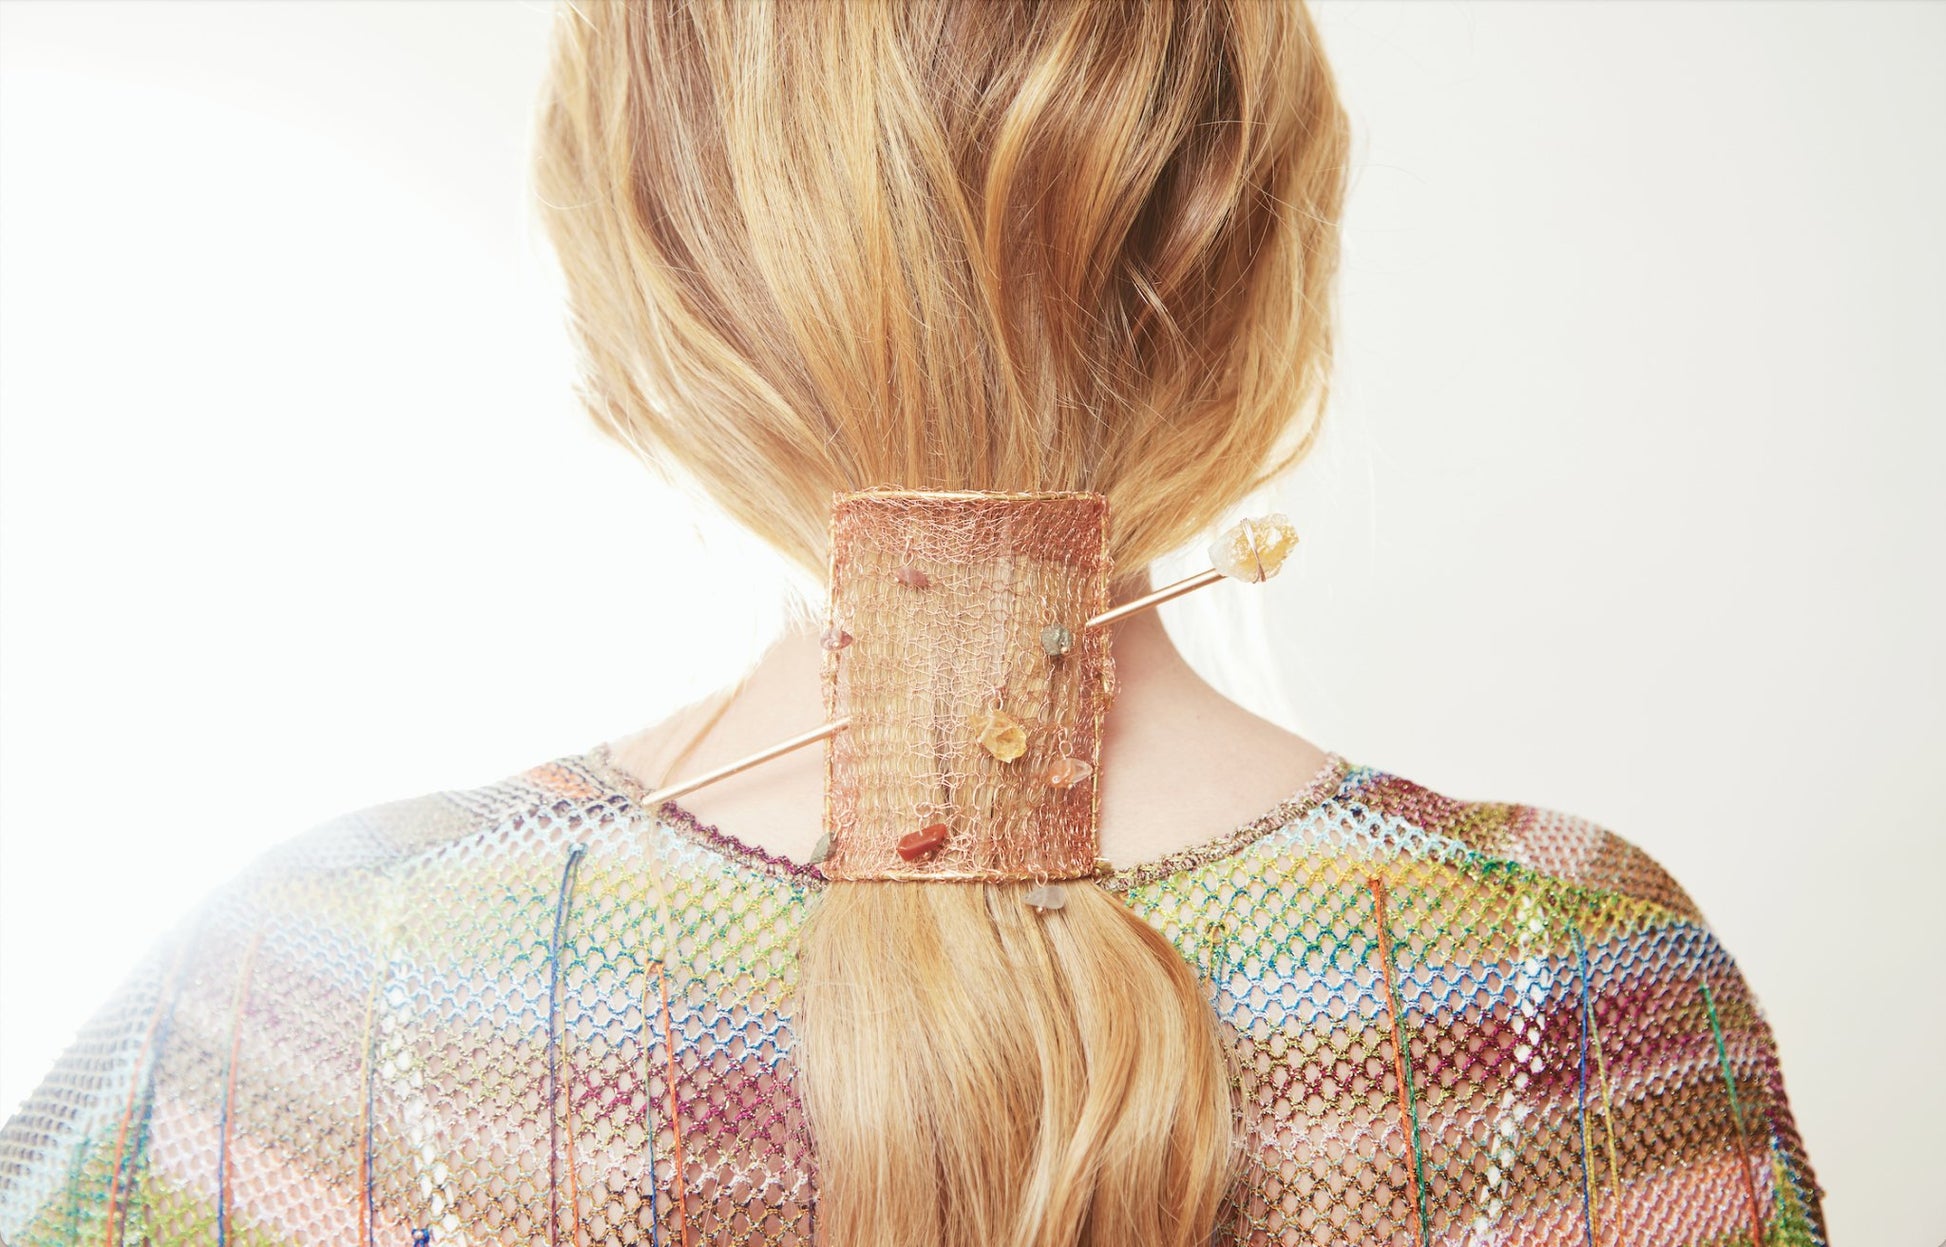 Copper Mesh Healing Crystal Hair Pin - Ariana Ost